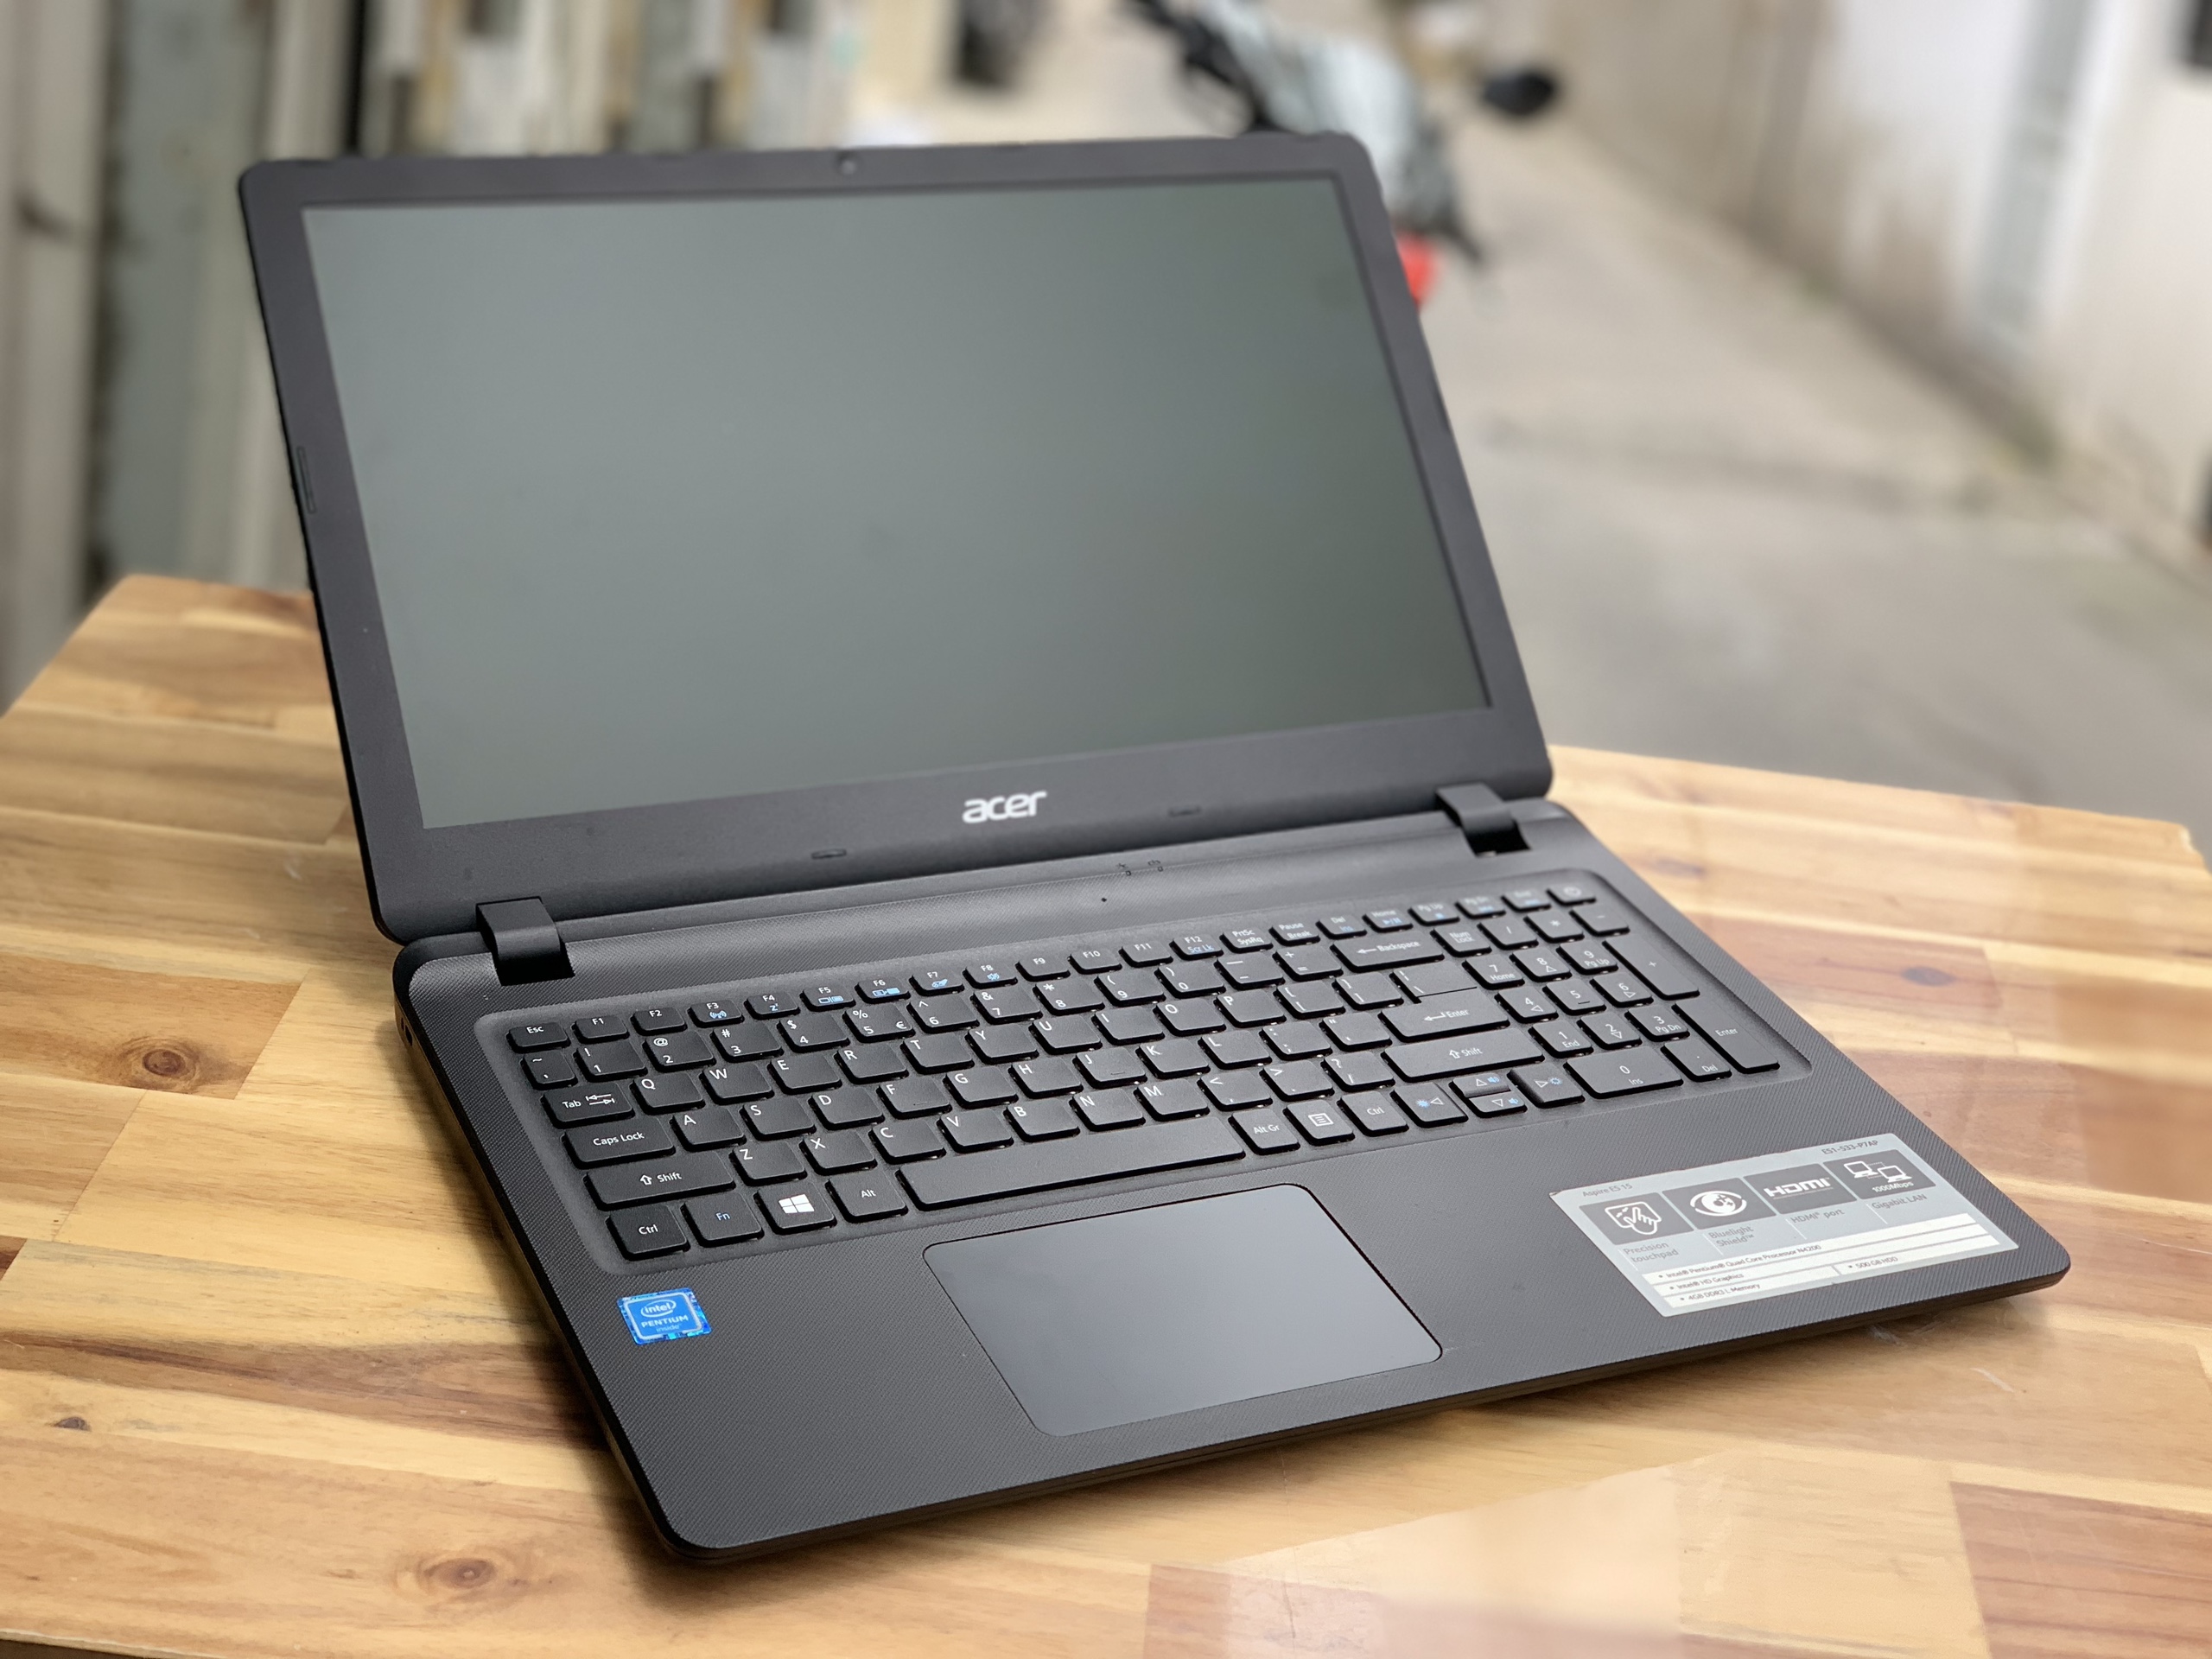 Laptop Acer Aspire Ultrabook ES1-531, N3710 4G 500G 15inch Pin khủng 3 ~ 6h Like new Giá rẻ3